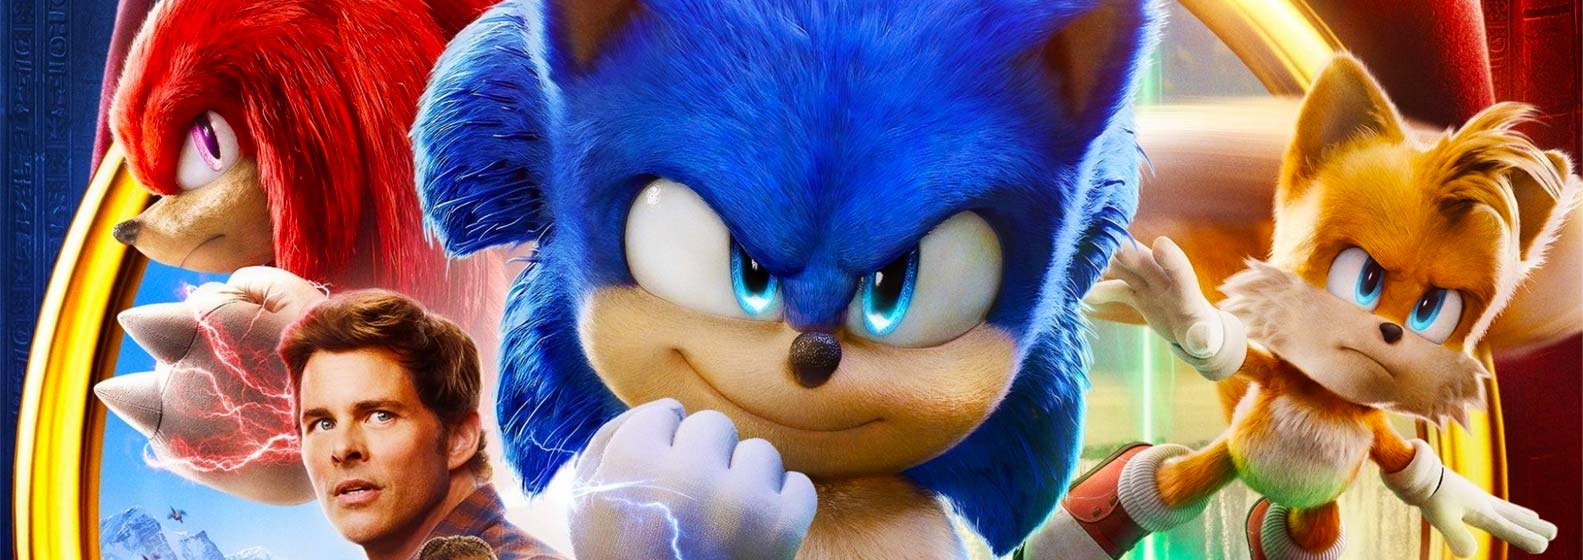 Sonic the Hedgehog 2 - Header Image